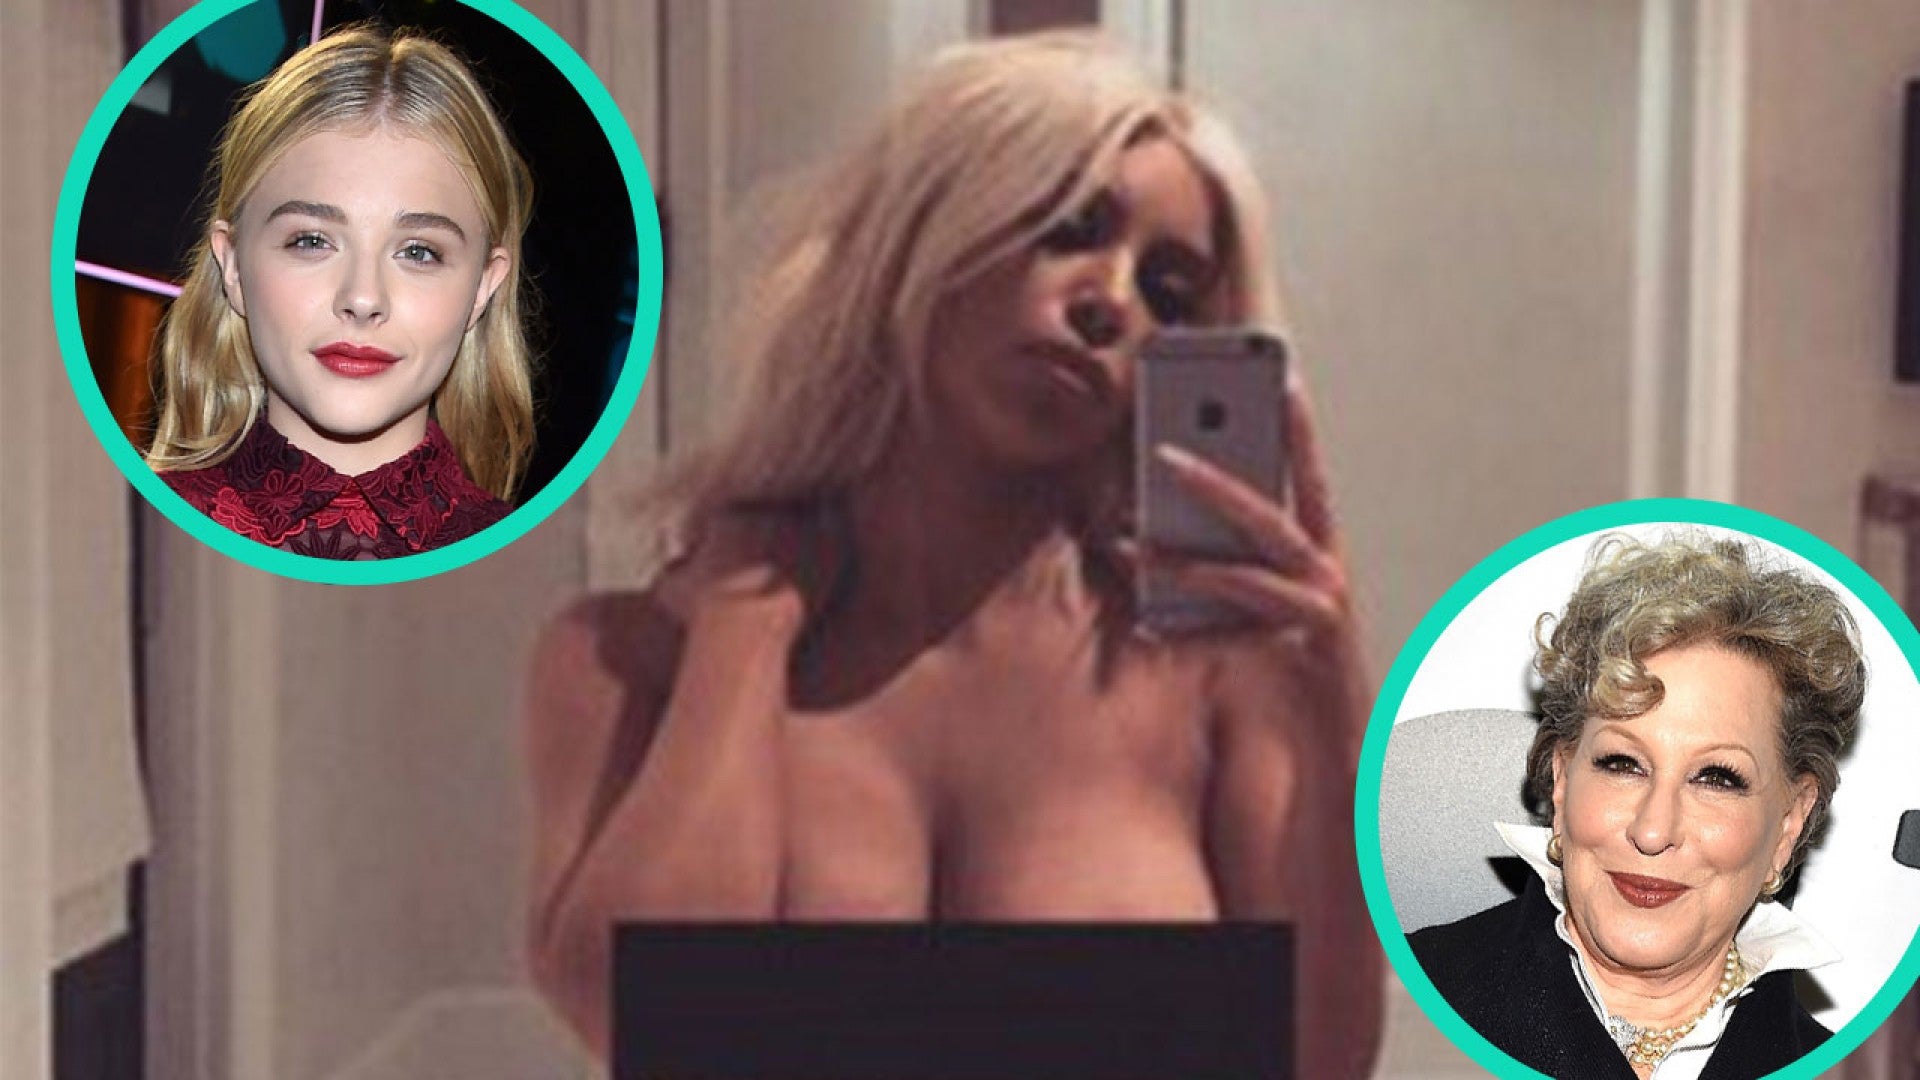 Chloe Grace Moretz Porn Captions - Bette Midler and Chloe Grace Moretz Slam Kim Kardashian for Nude Selfie |  Entertainment Tonight